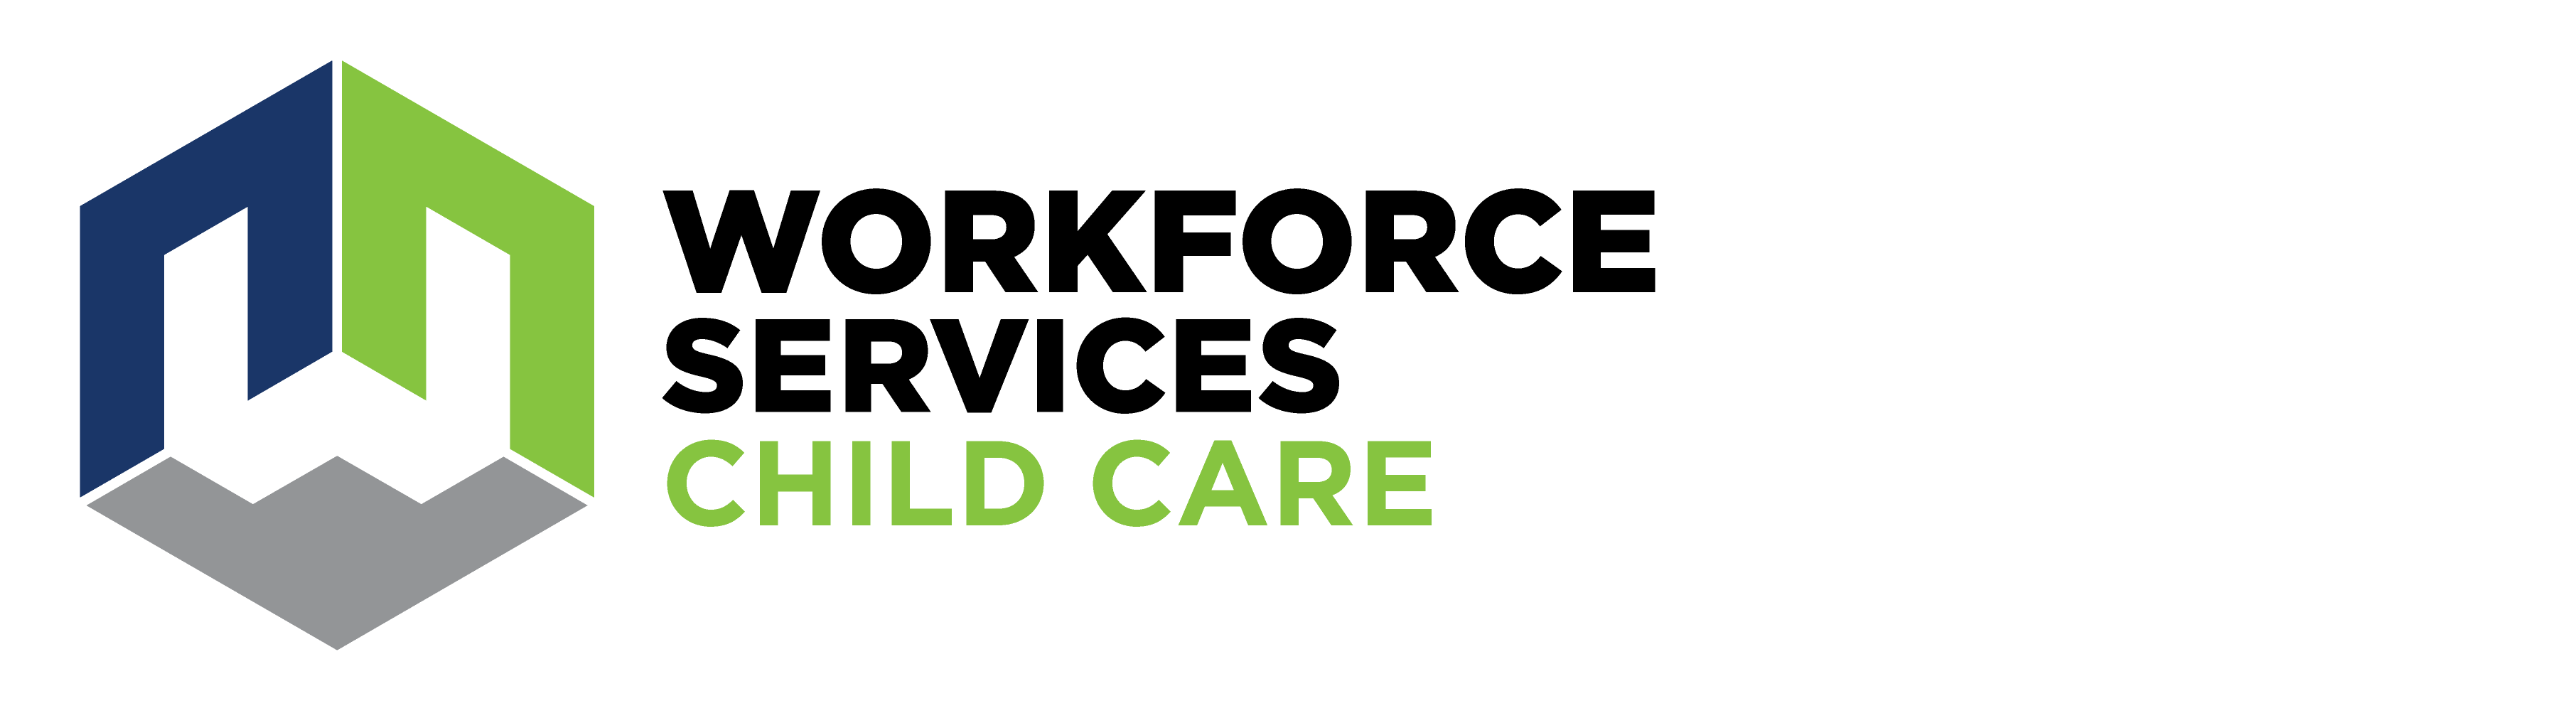 Workforce Logo - LogoDix